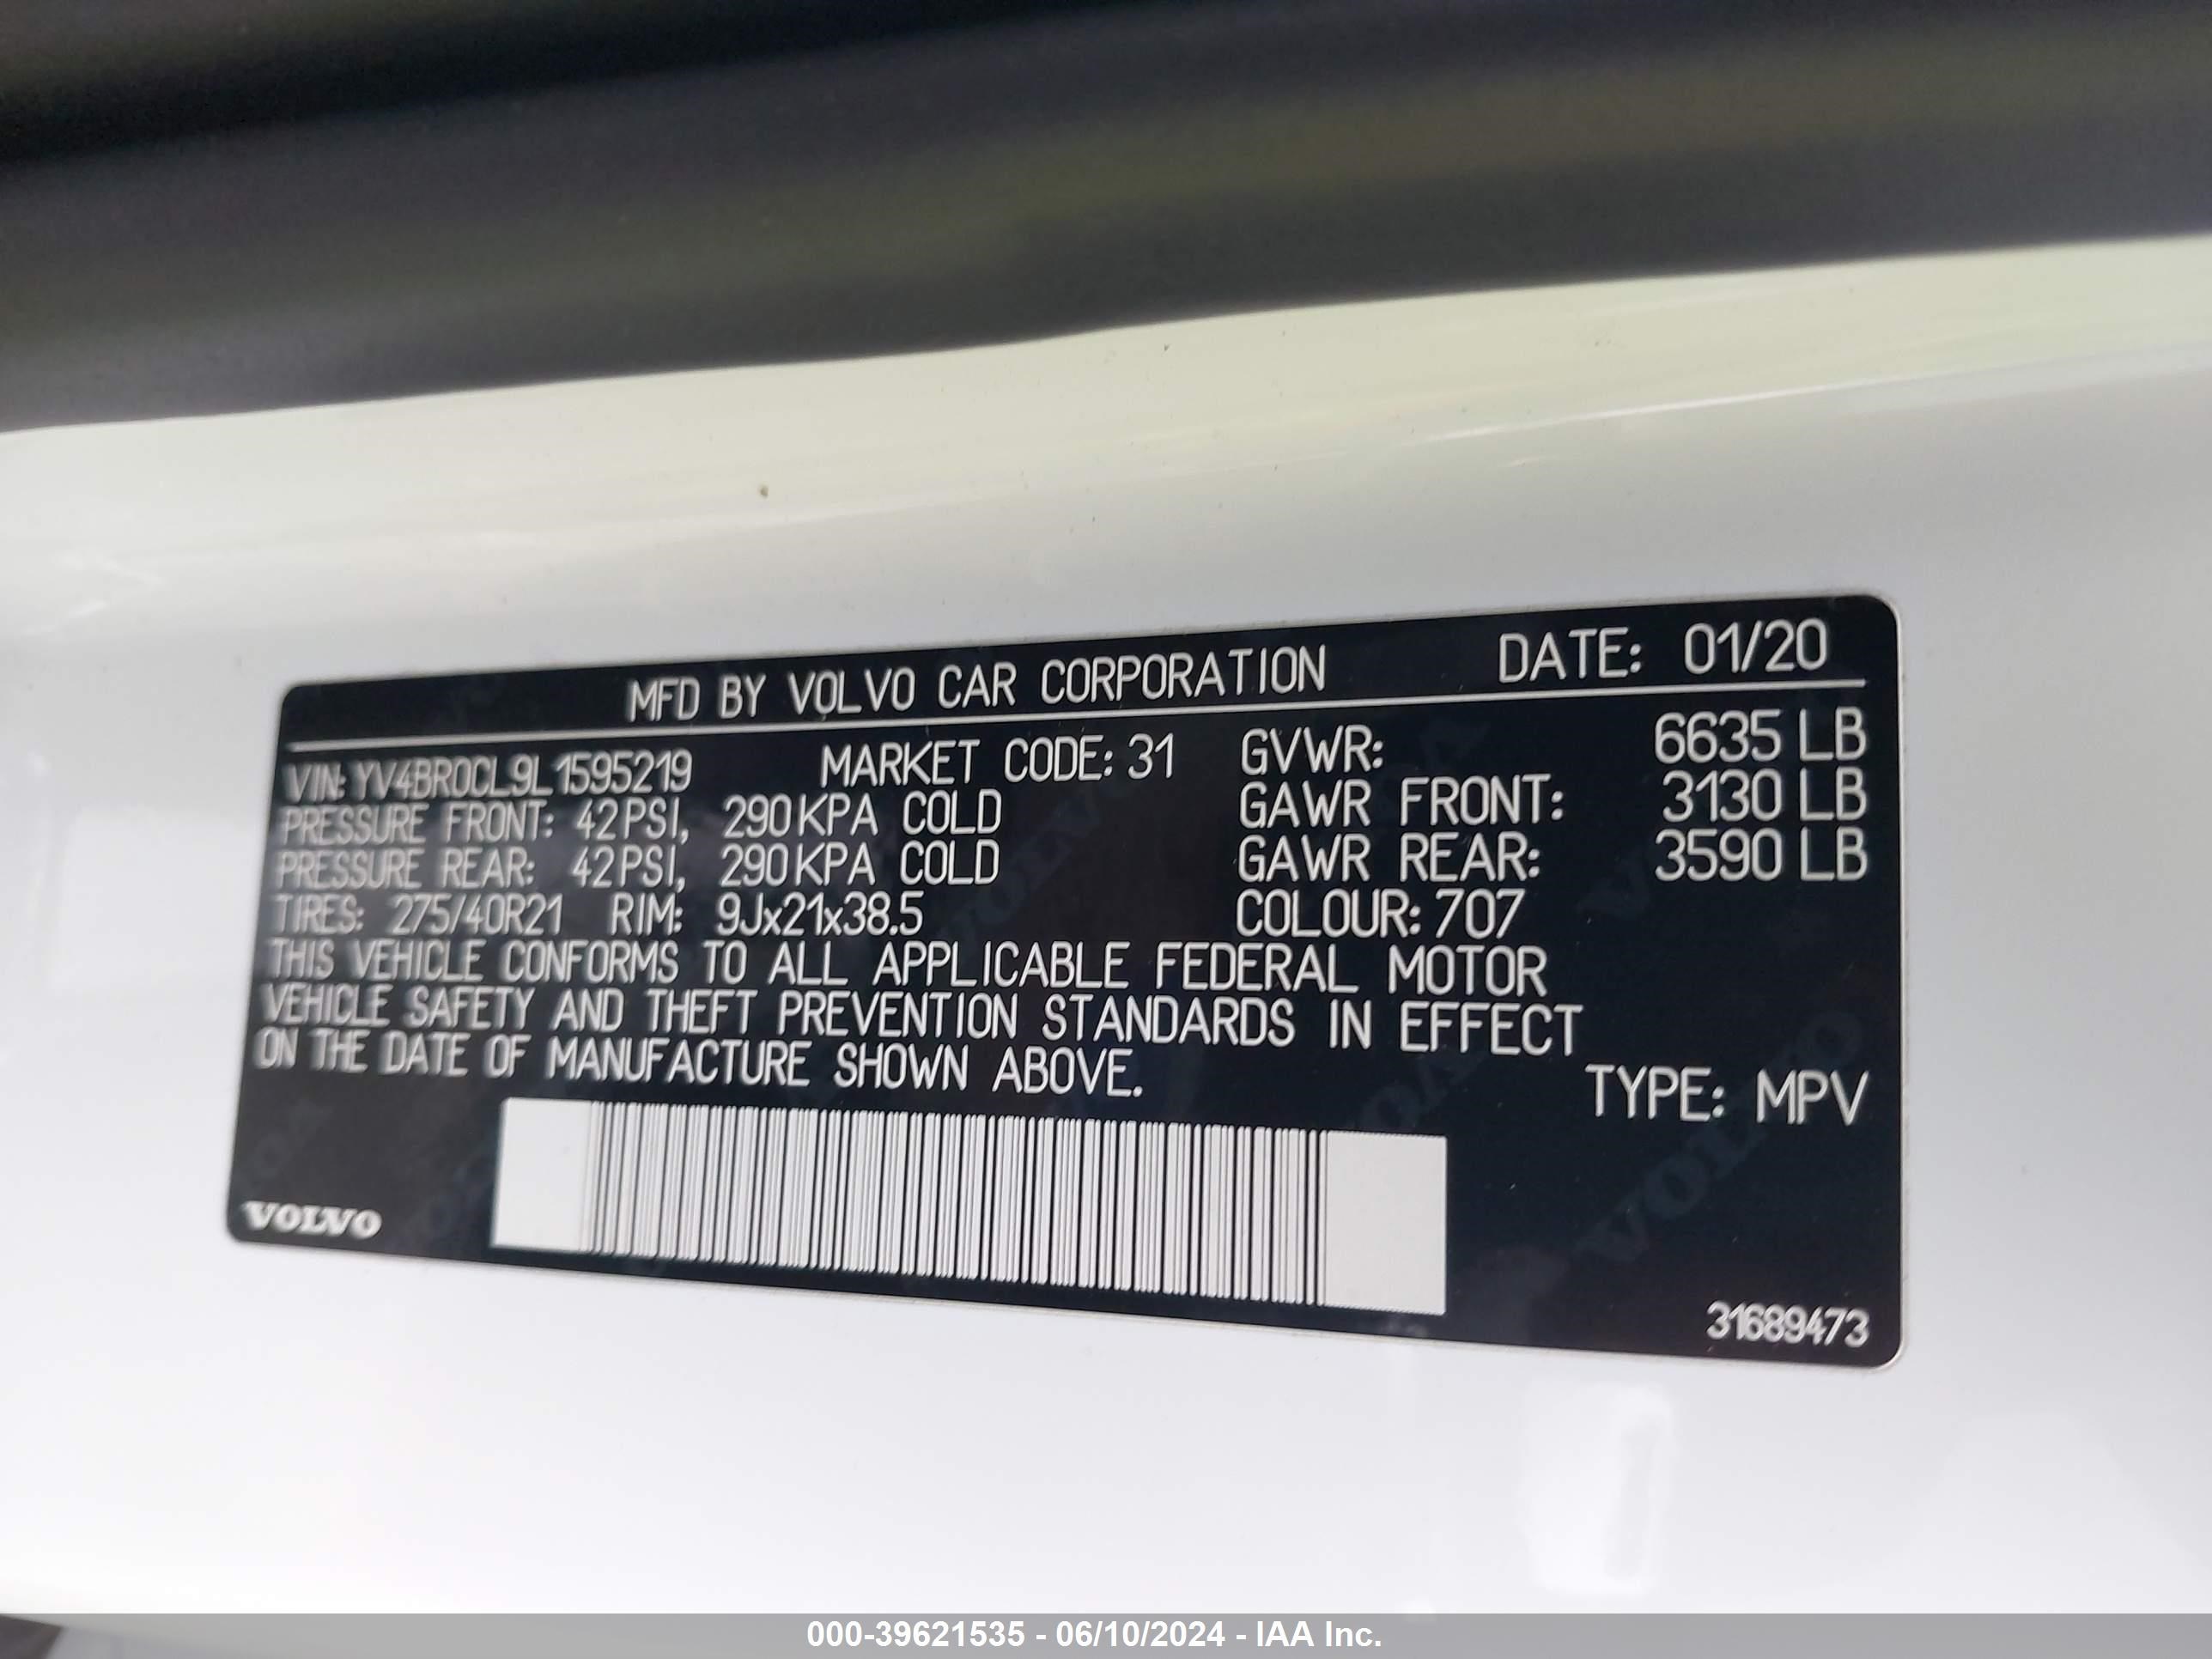 2020 Volvo Xc90 Hybrid T8 Inscription 7 Passenger vin: YV4BR0CL9L1595219